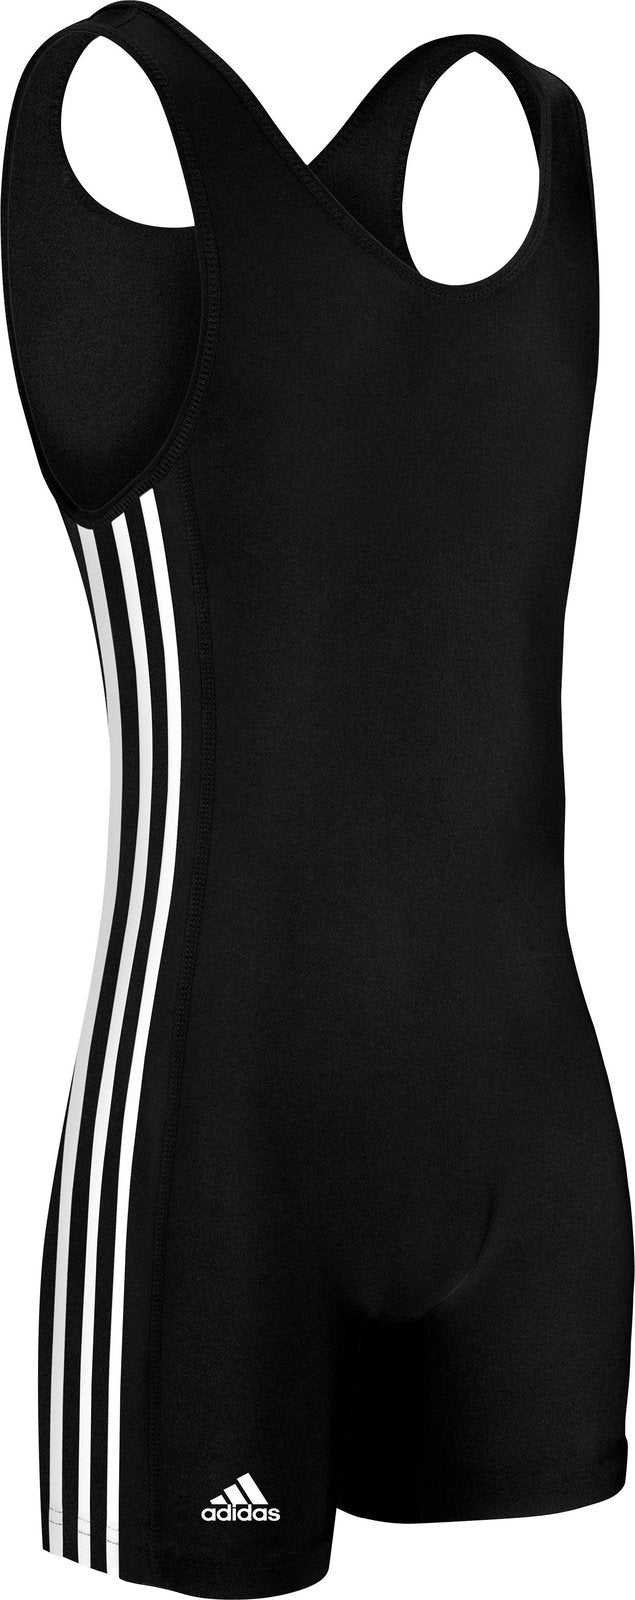 Adidas aS102s 3 Stripe Wrestling Singlet - Black White - HIT a Double